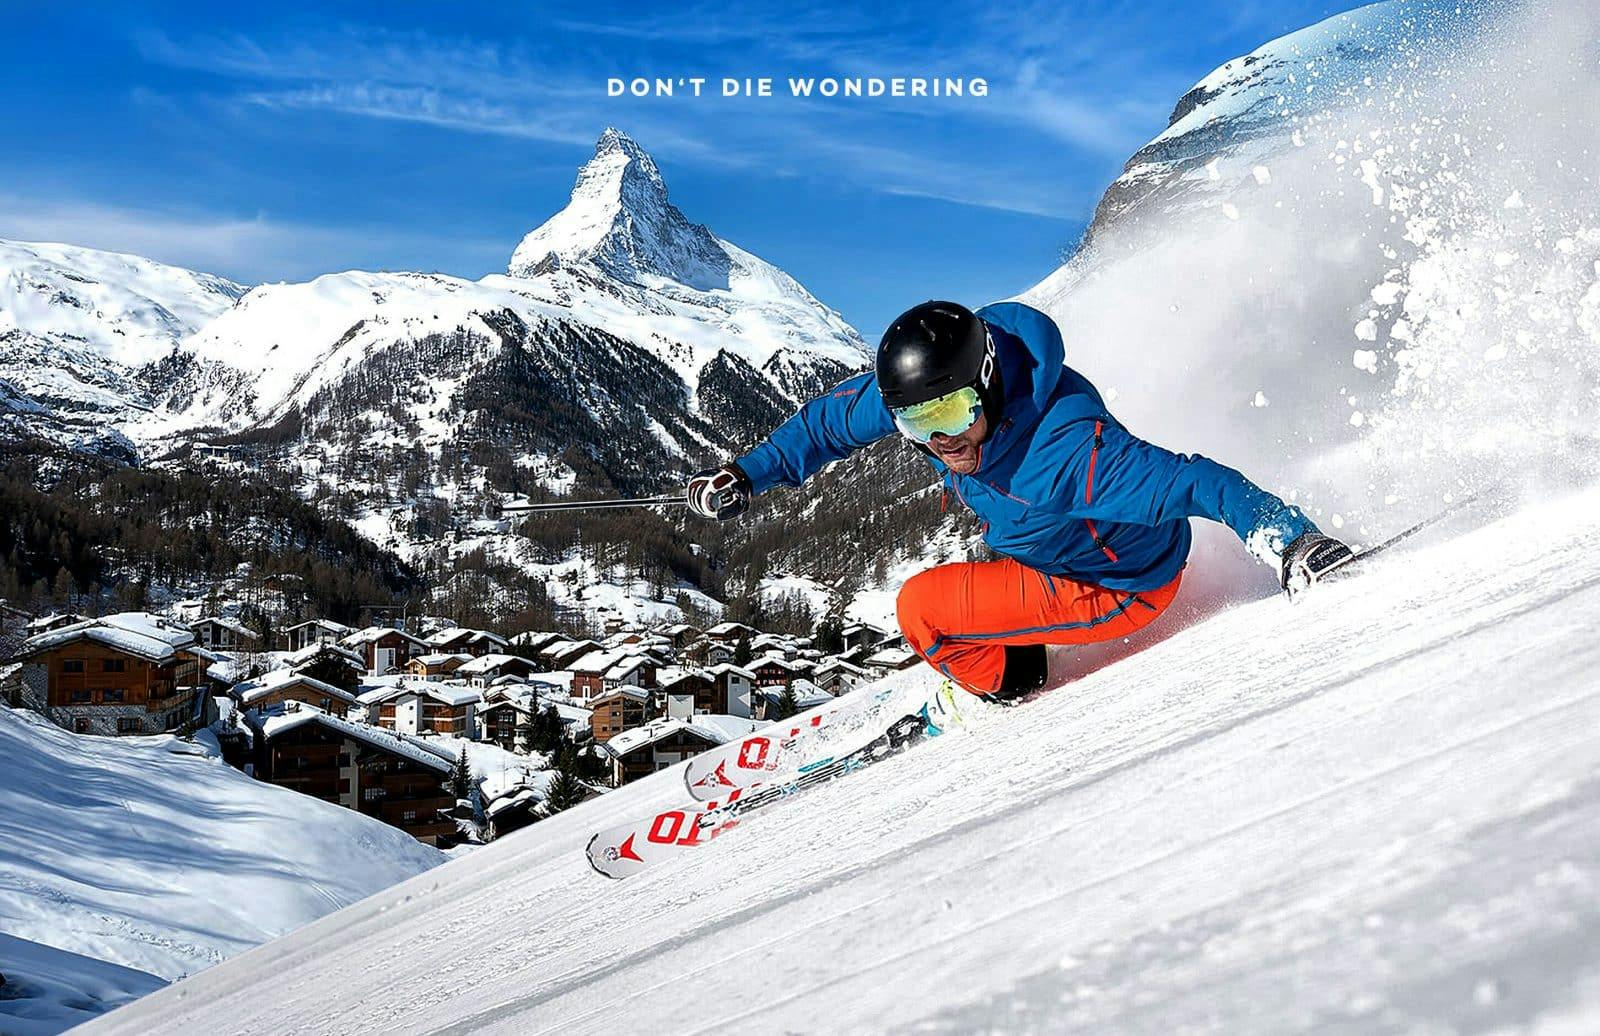 Top International Ski Resorts To Consider for the 21/22 Season